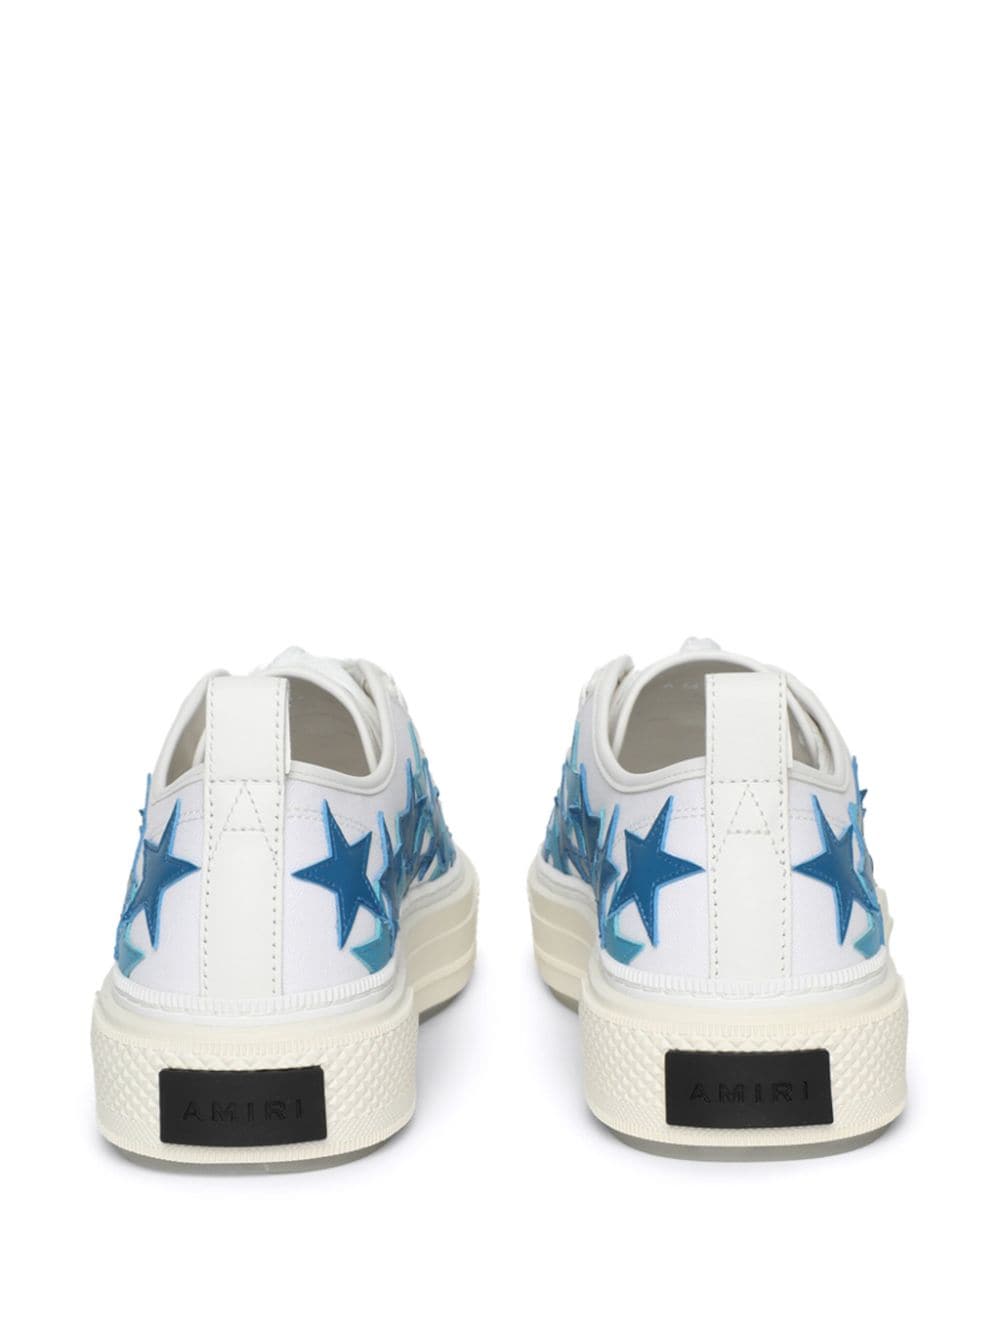 Stars Court appliqué sneakers